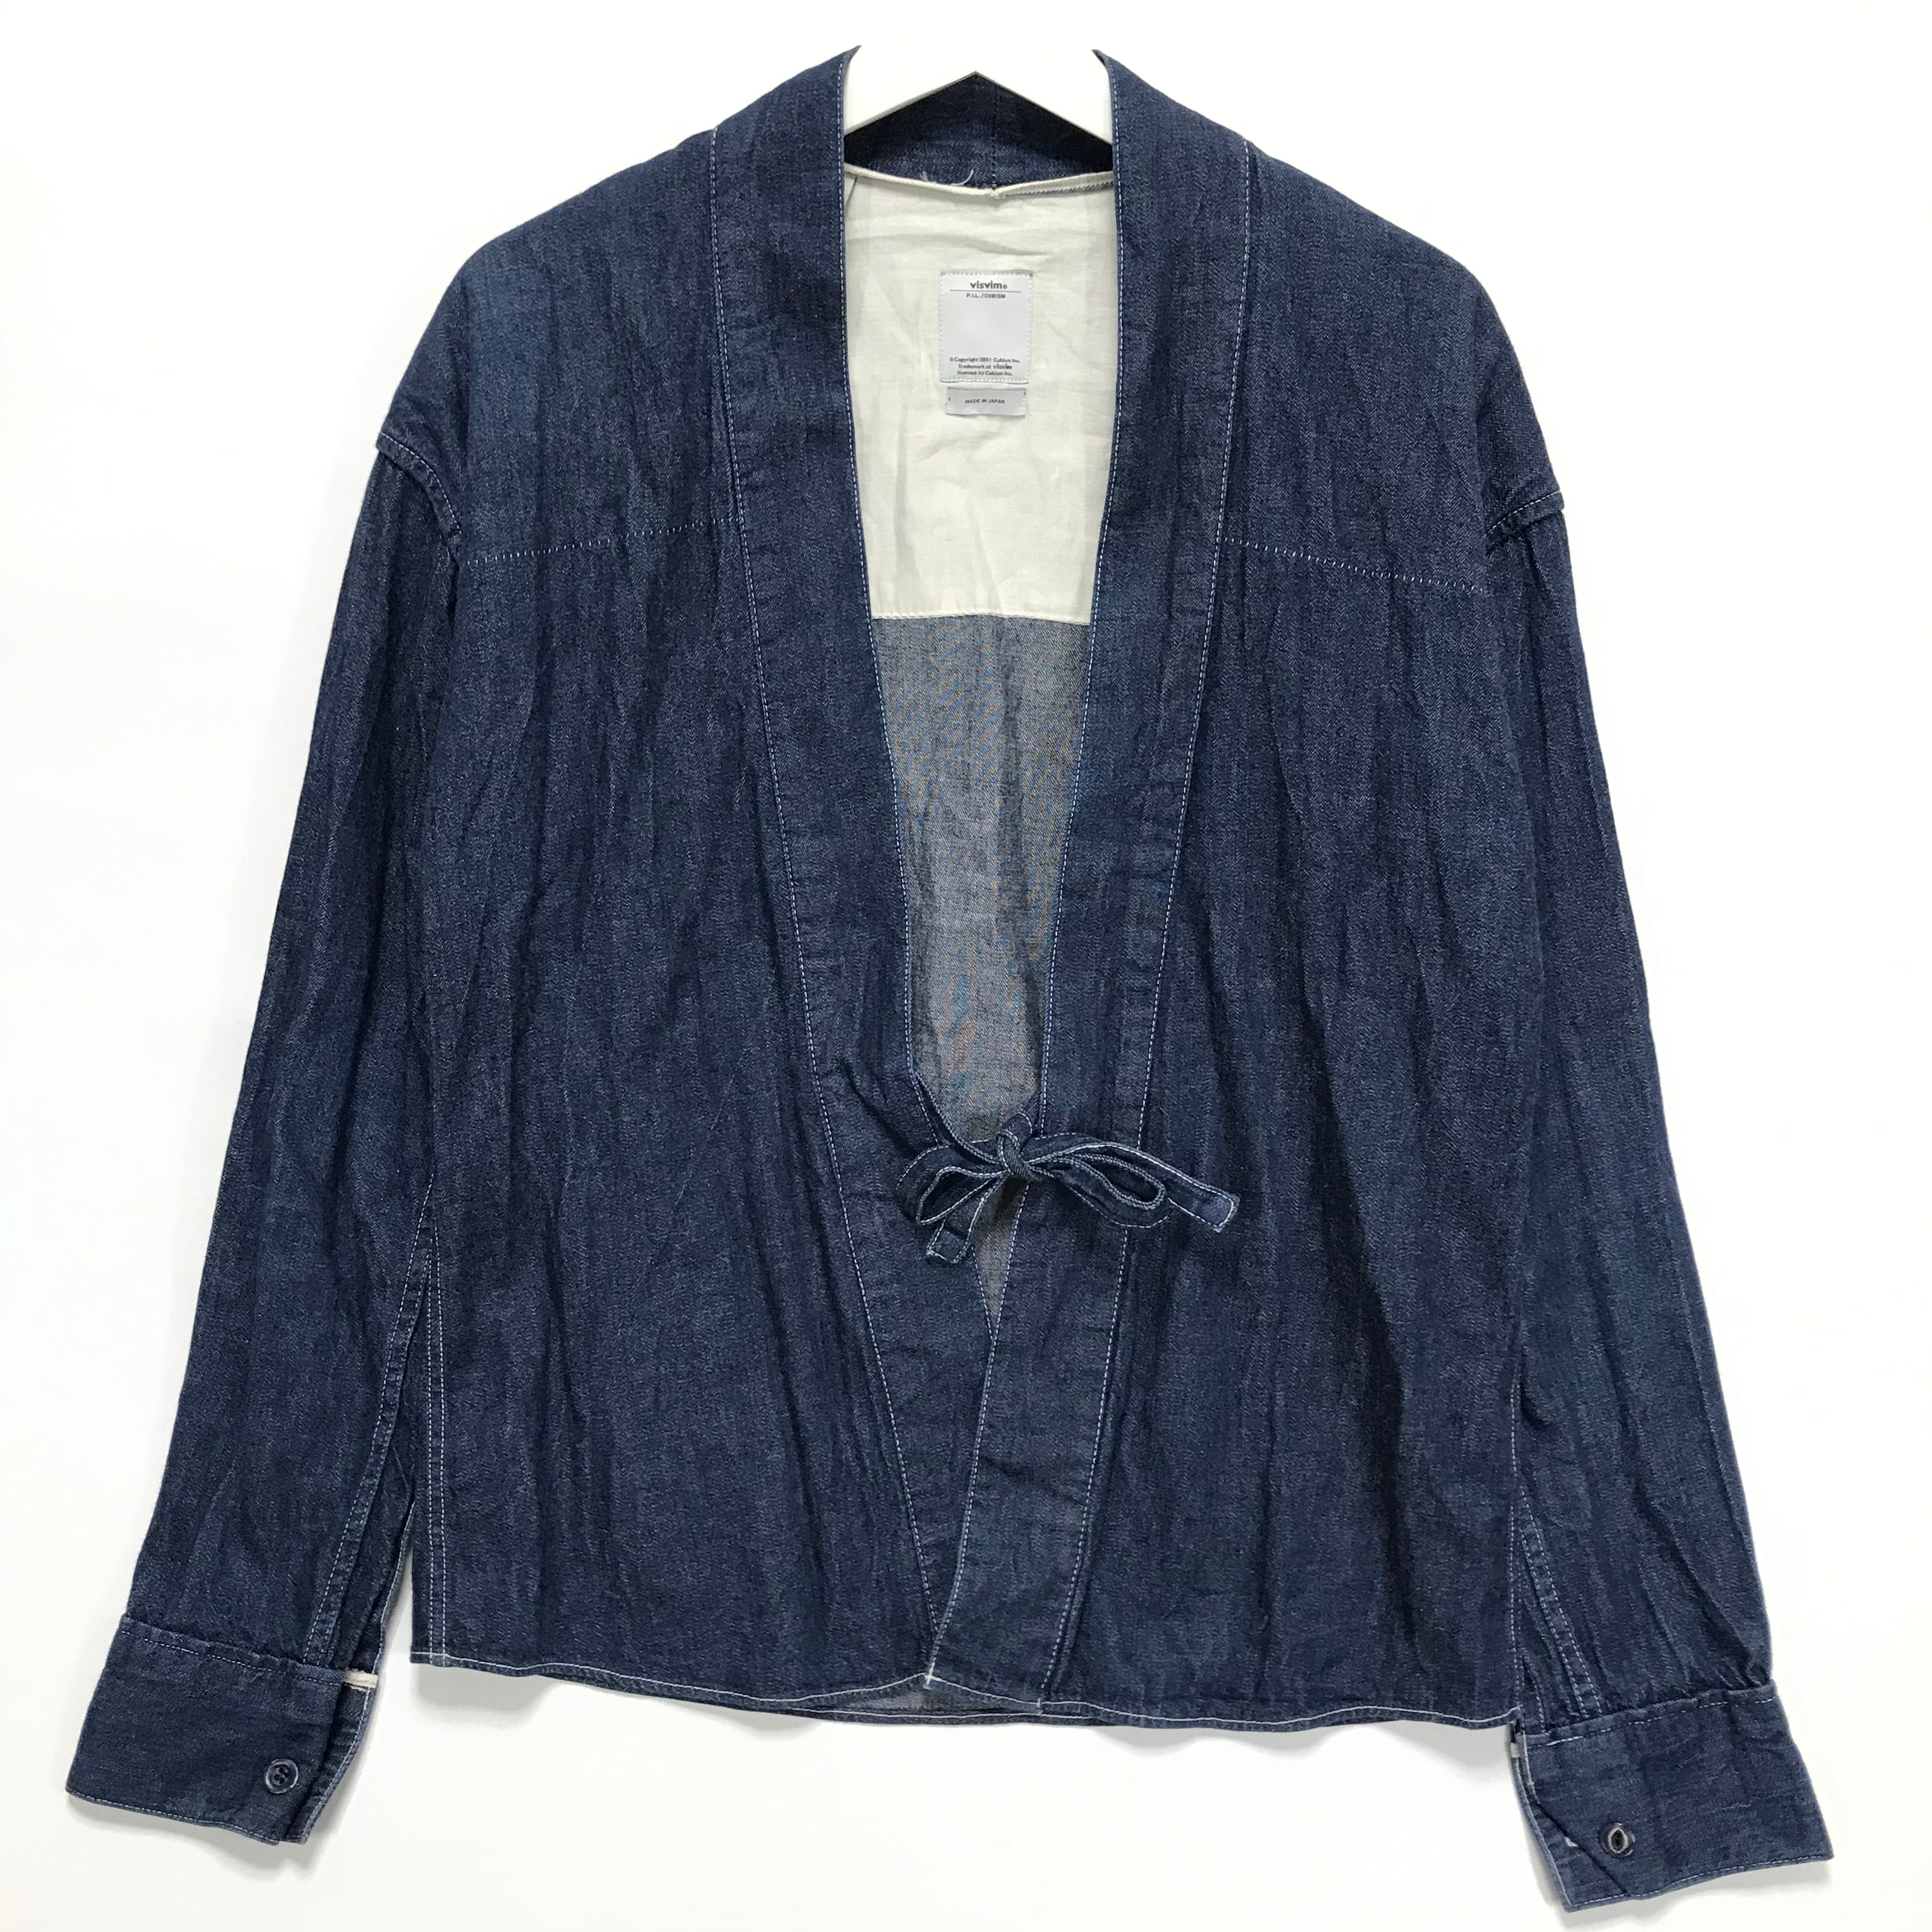 M] Visvim SS Lhamo Shirt One Wash Indigo – StylisticsJapan.com